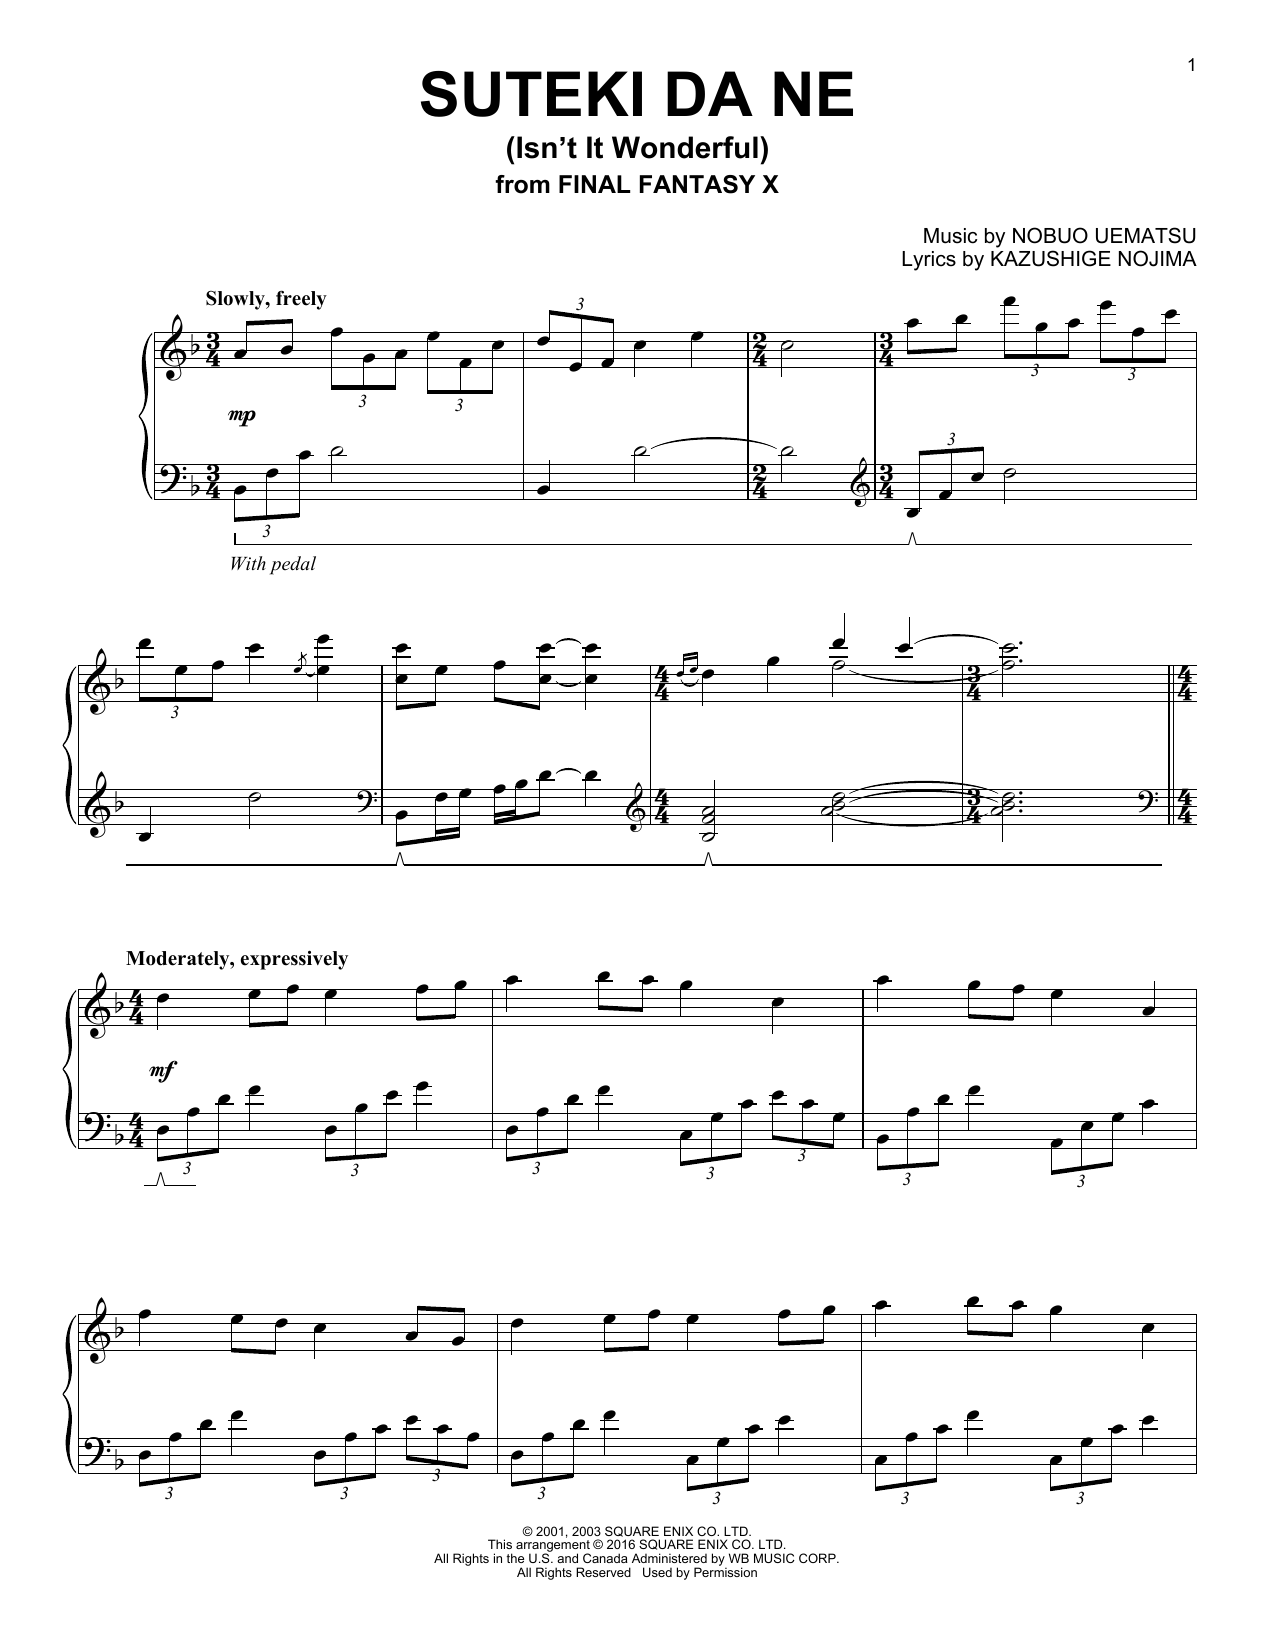 Kazushige Nojima Suteki Da Ne (Isn't It Wonderful) (from Final Fantasy X) Sheet Music Notes & Chords for Piano - Download or Print PDF